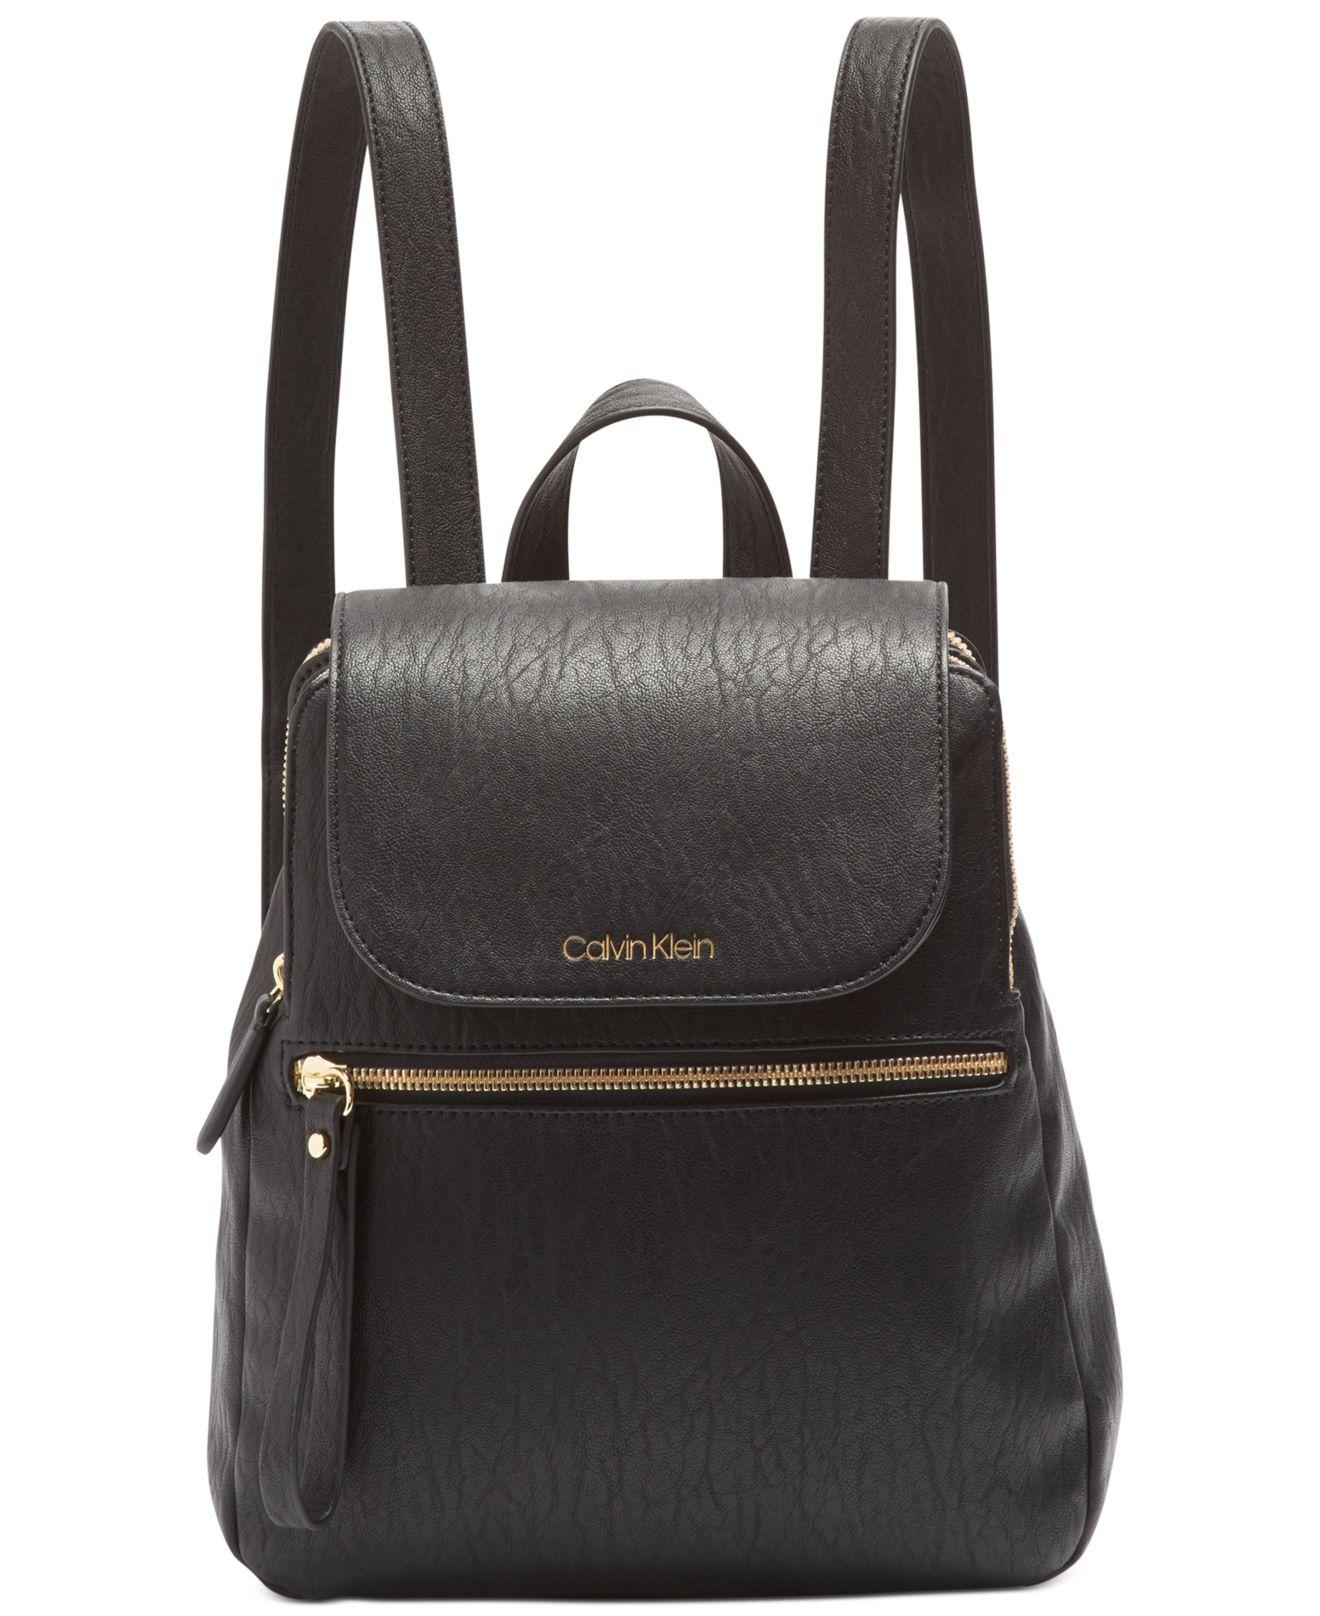 Calvin Klein Elaine Flap Backpack in Black/Gold (Black) - Lyst